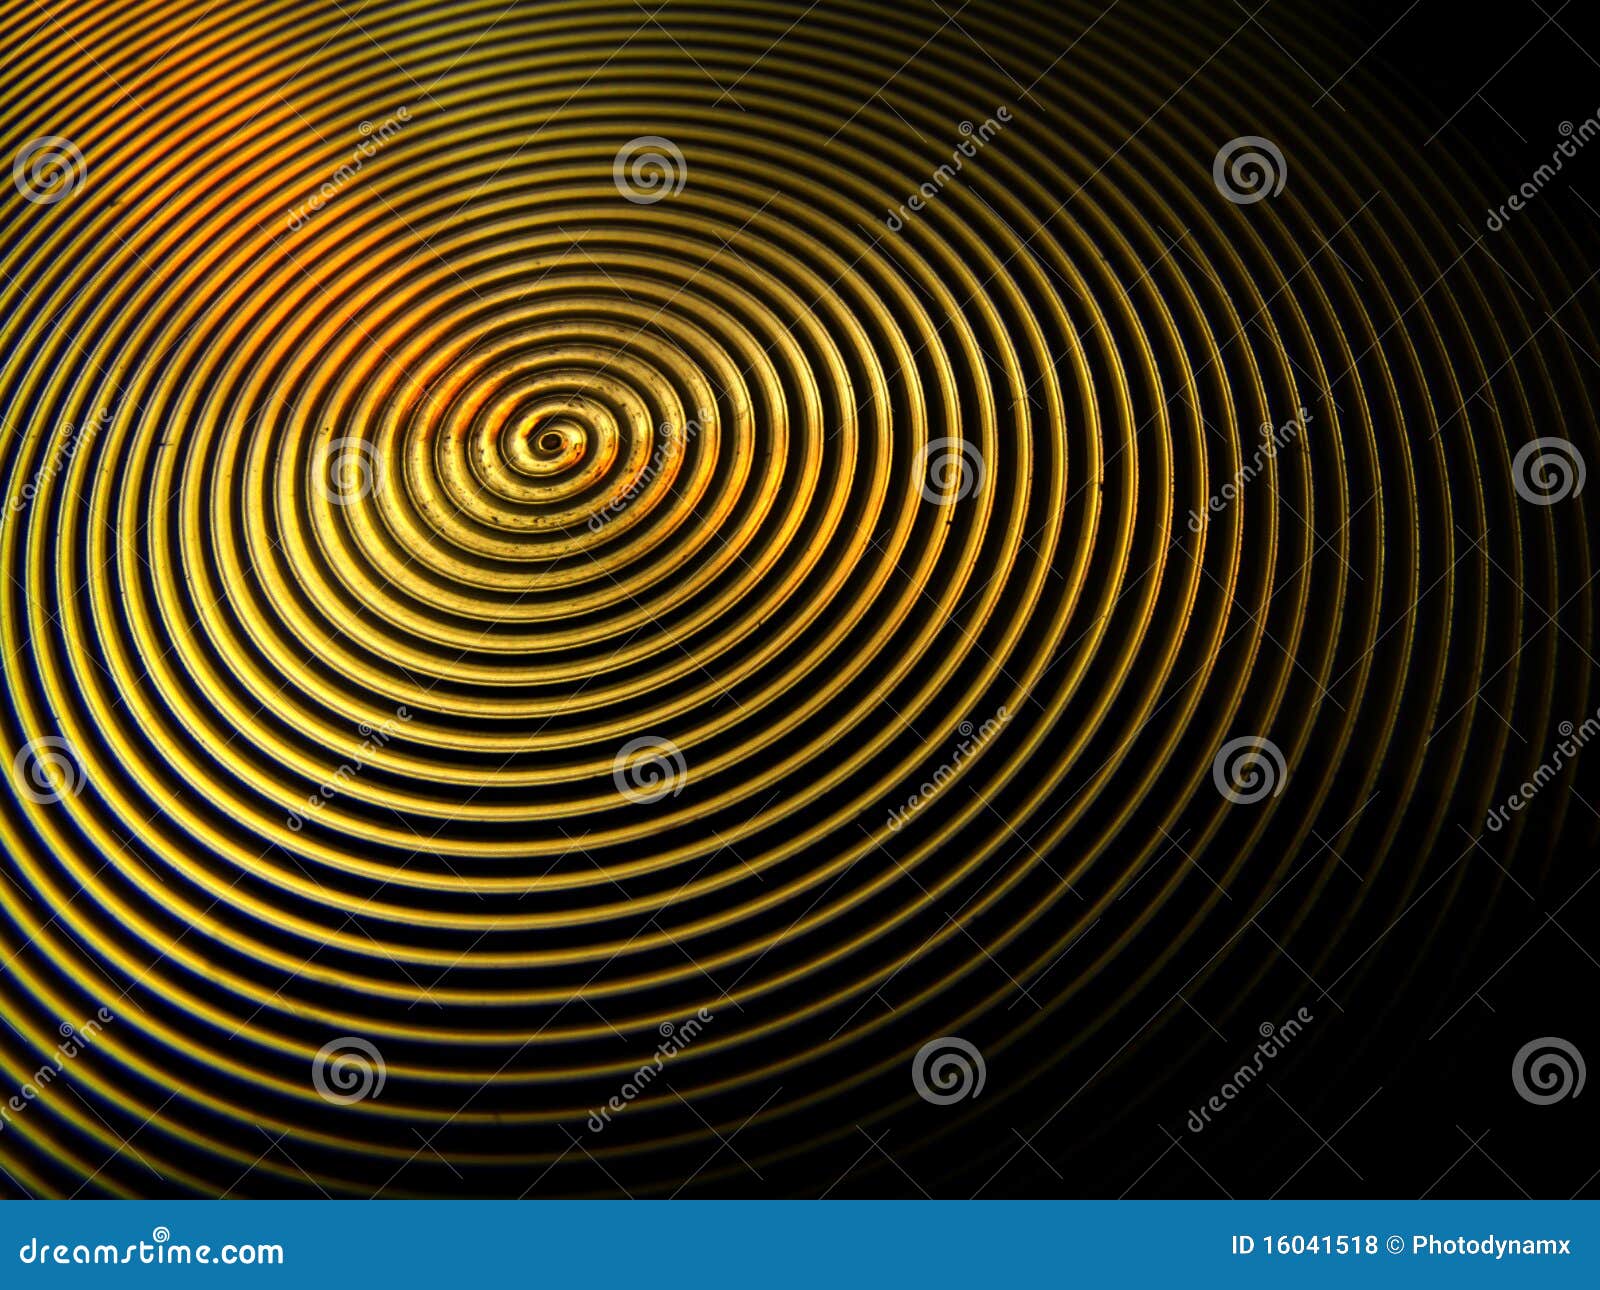 vertigo swirls grooves circles ripples rings